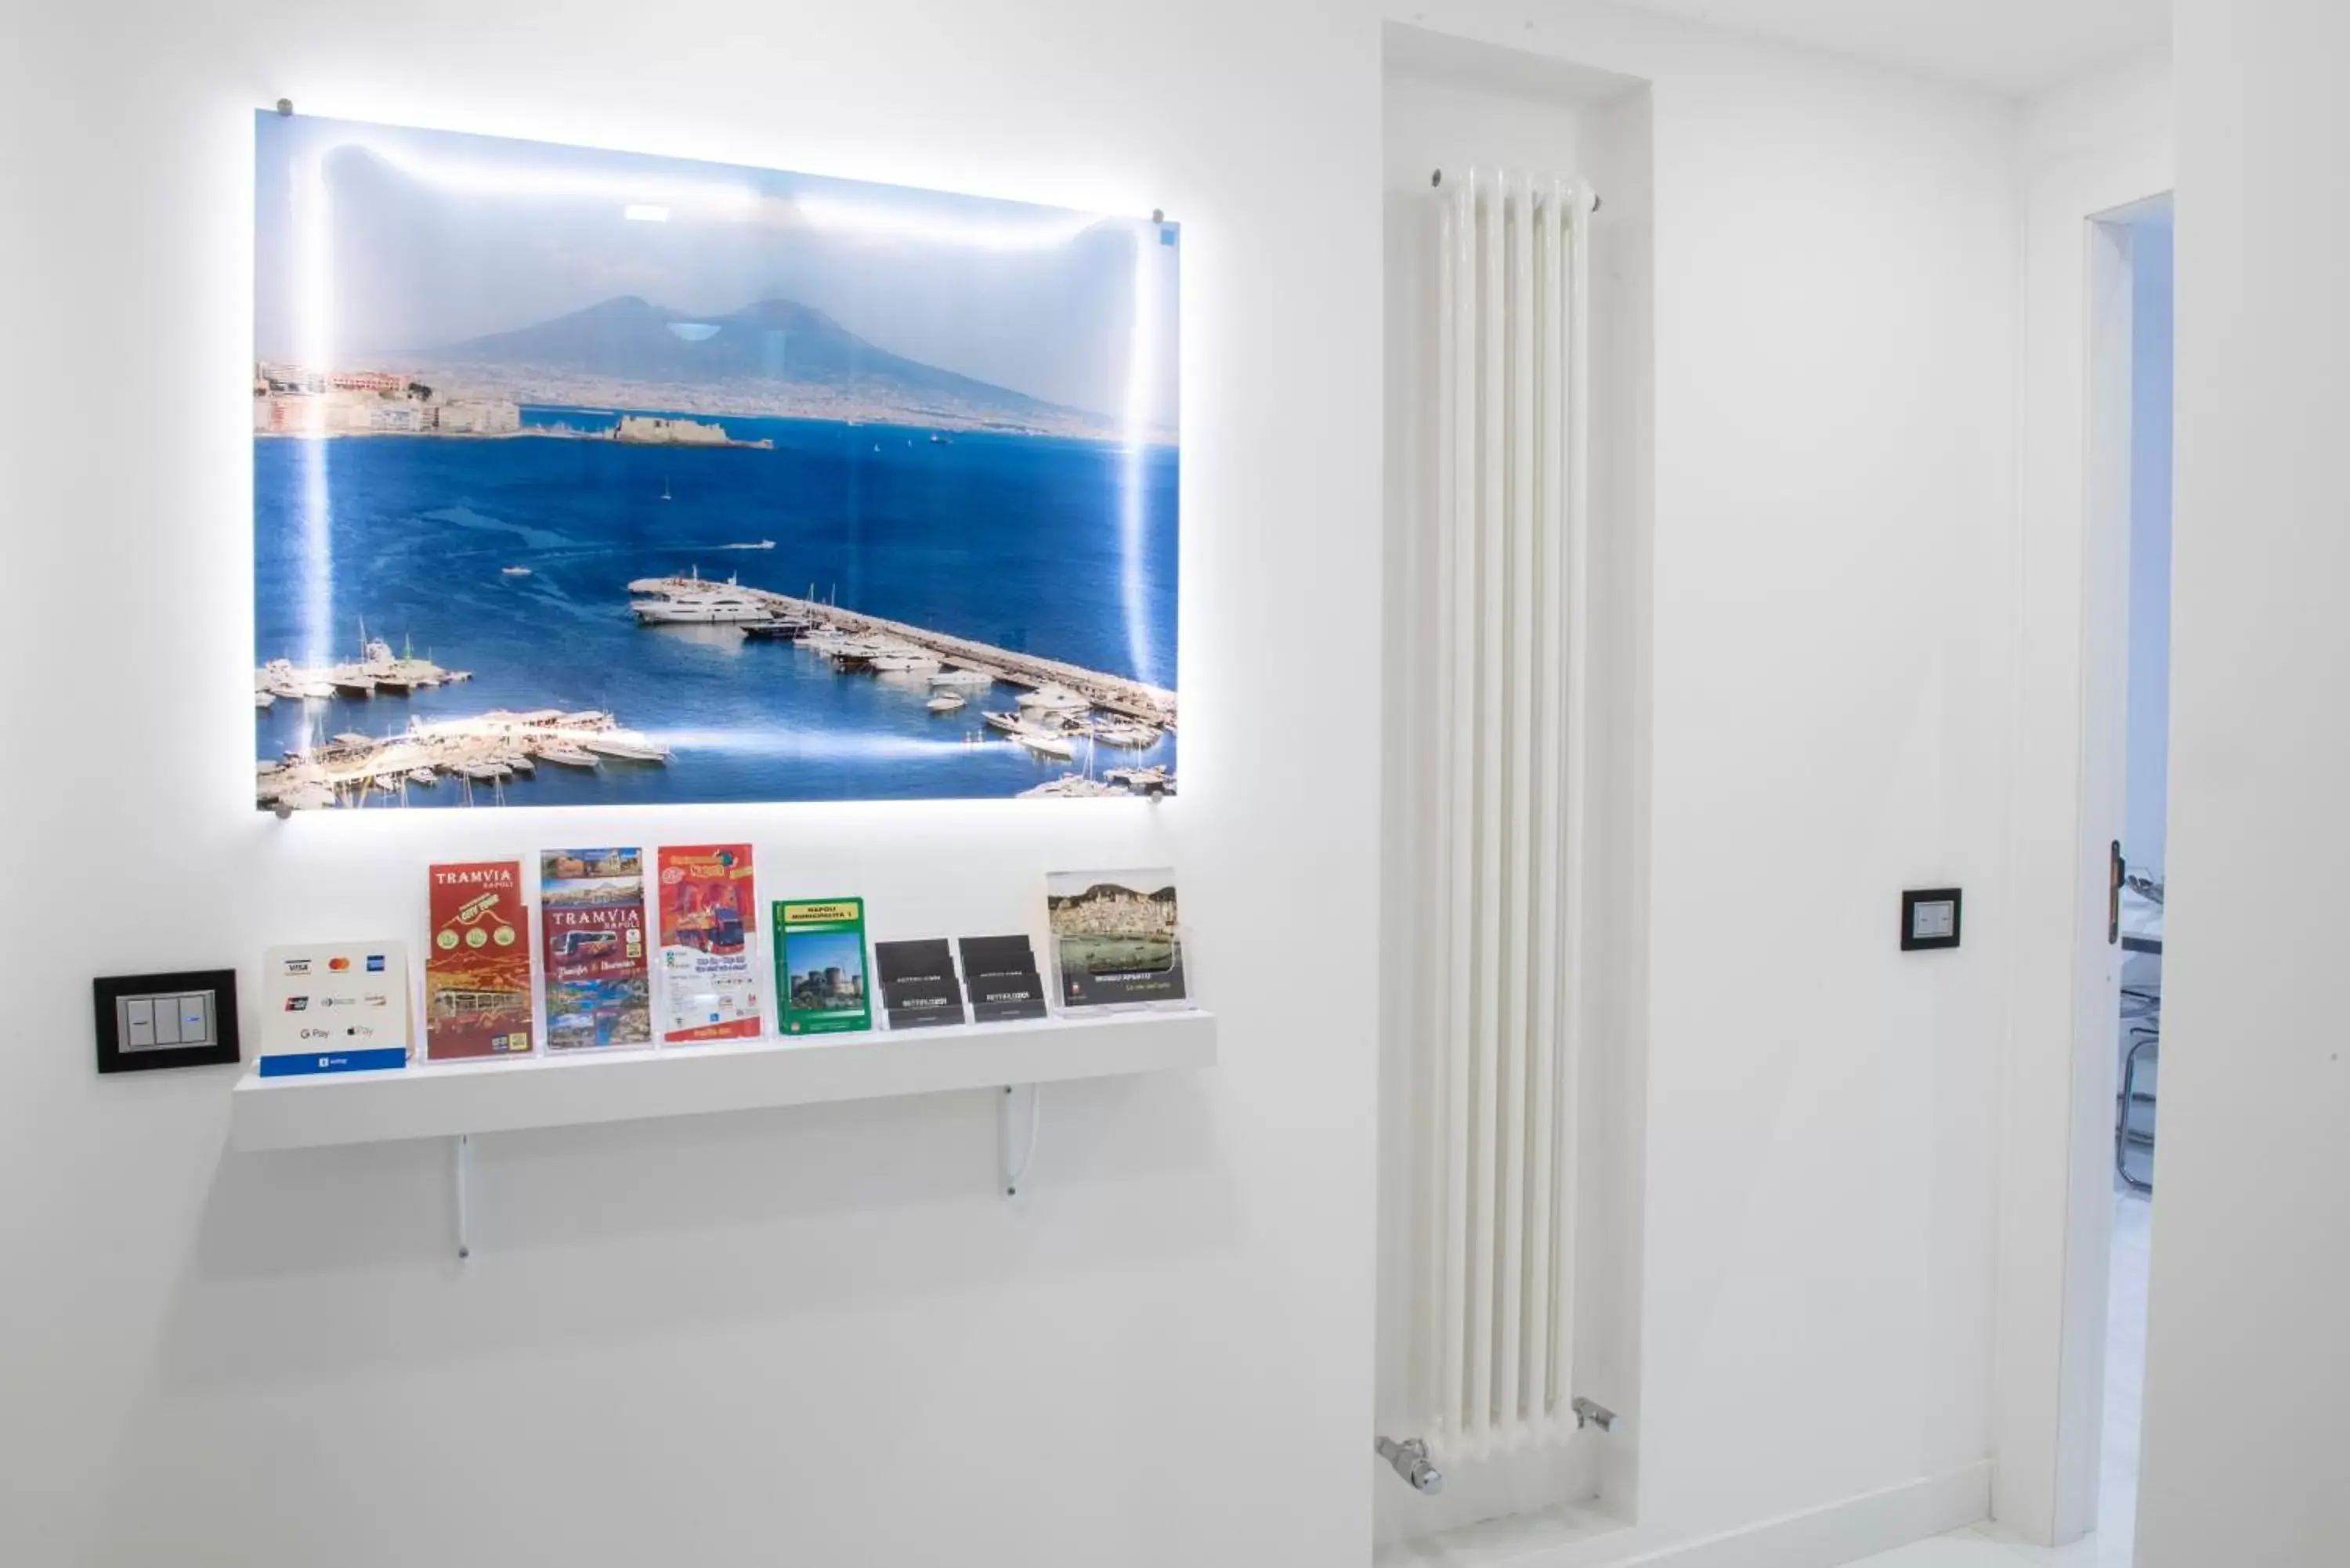 Area and facilities in Rettifilo 201 Exclusive Rooms